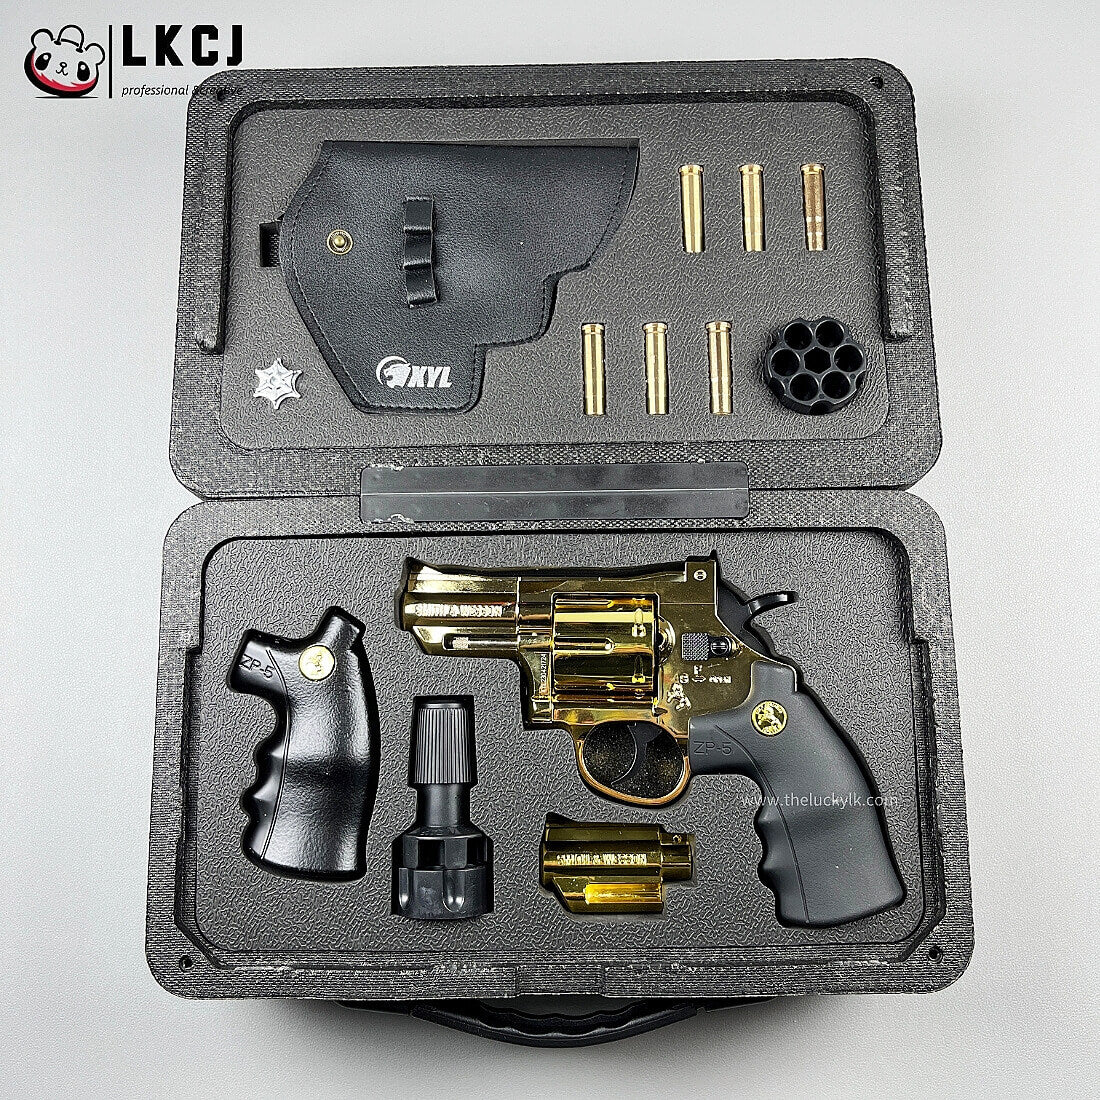 New Metal ZP-5 Revolver Gel Blaster/Soft Bullt Toy Gun LKCJ